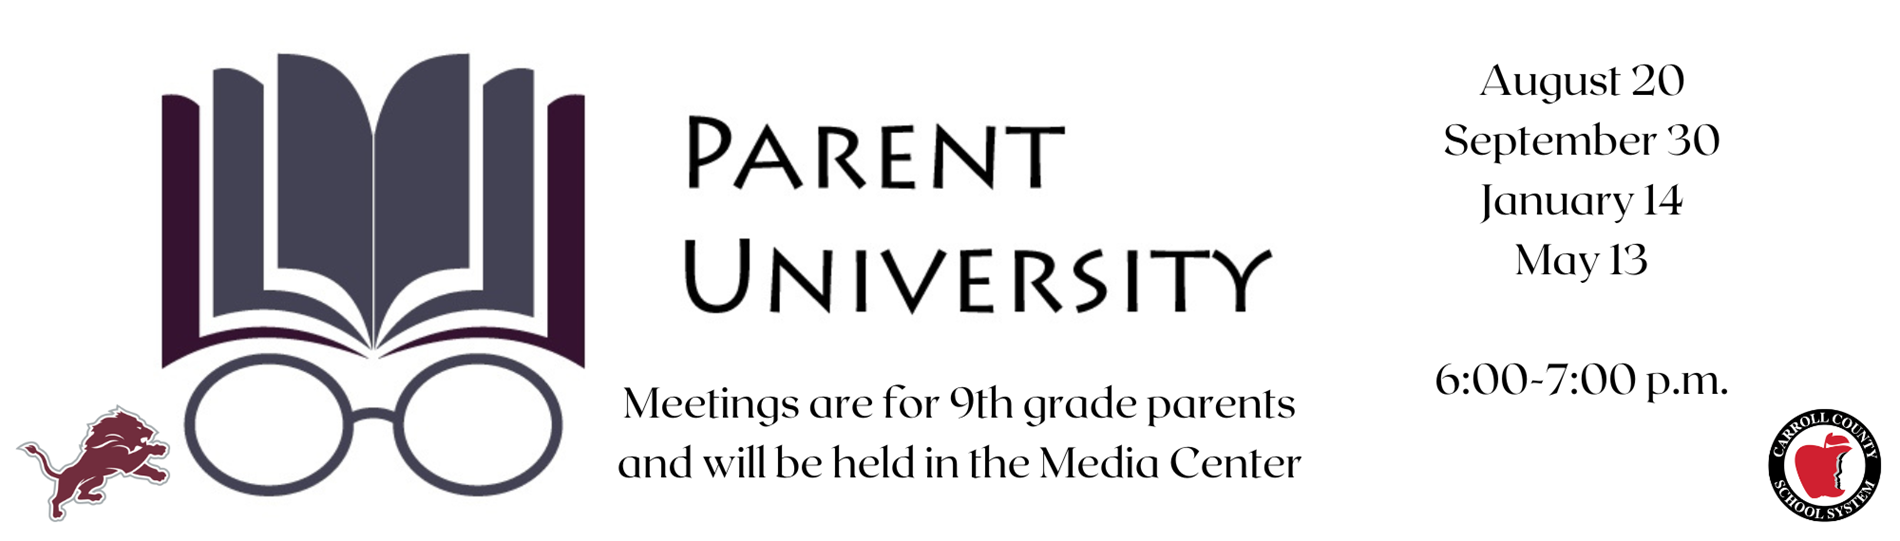 Parent University Meetings